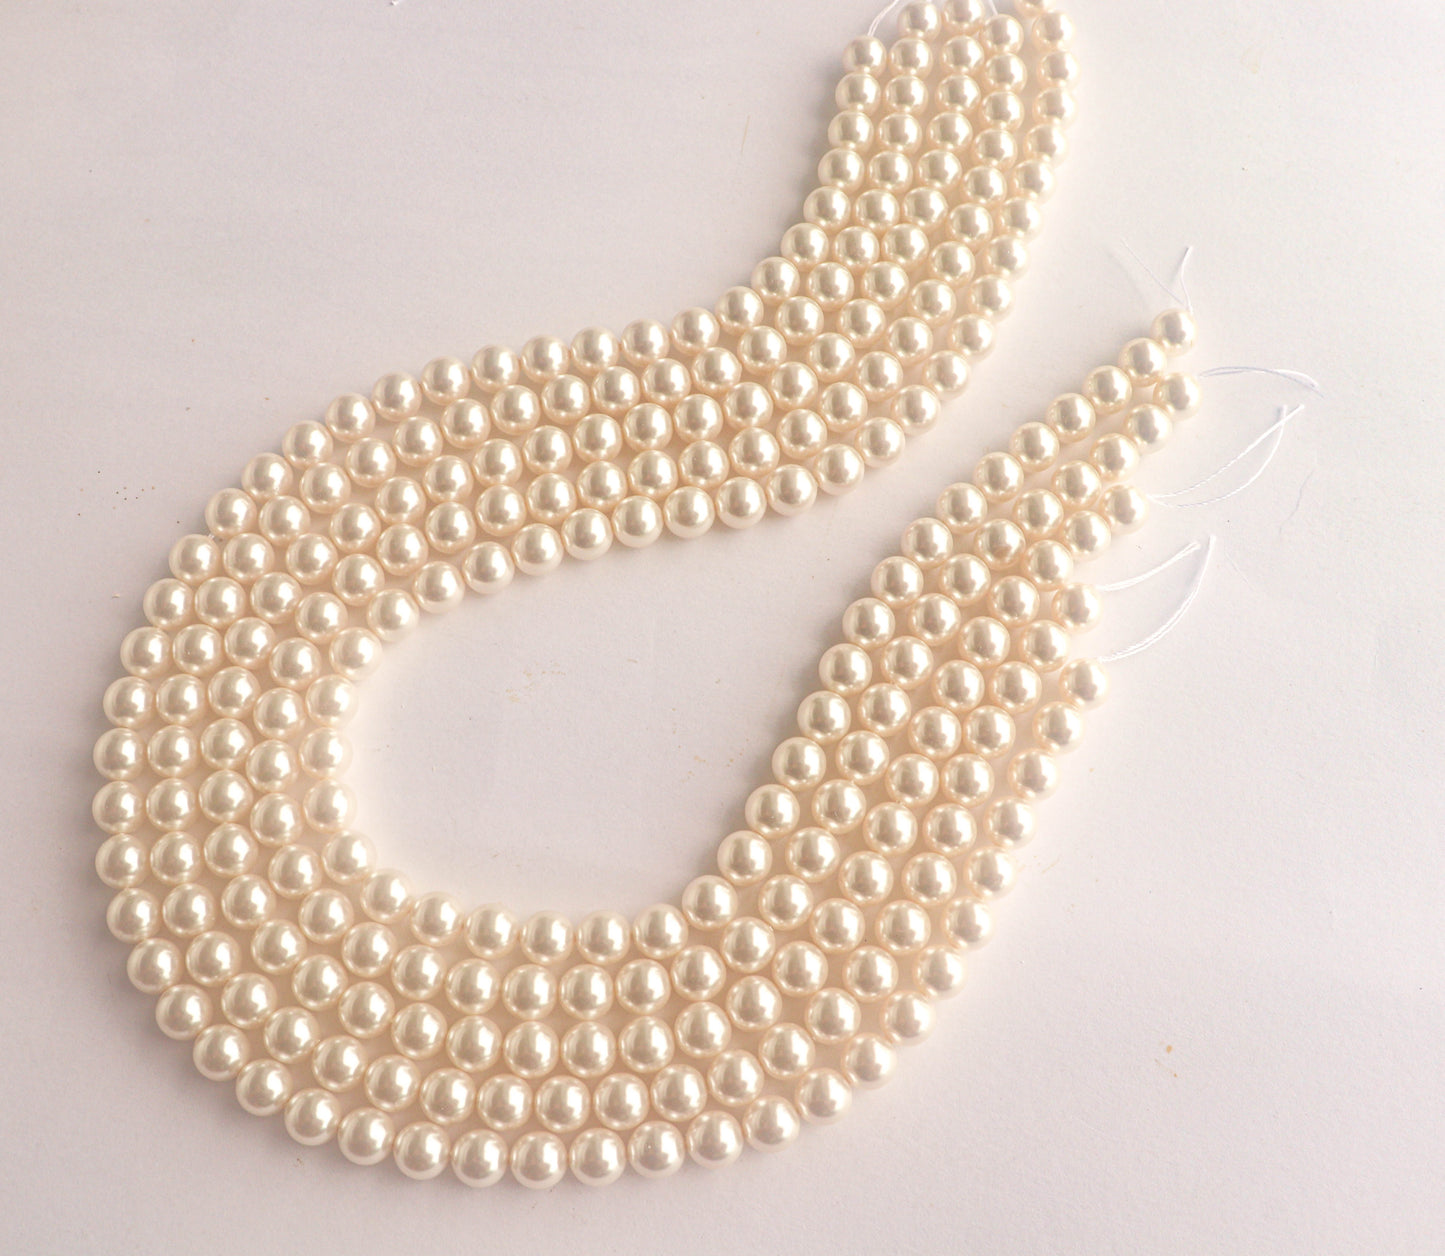 3mm Crystal White (001 650) Genuine Swarovski 5810 Pearls Round Beads jewelry making Beadsforyourjewelry